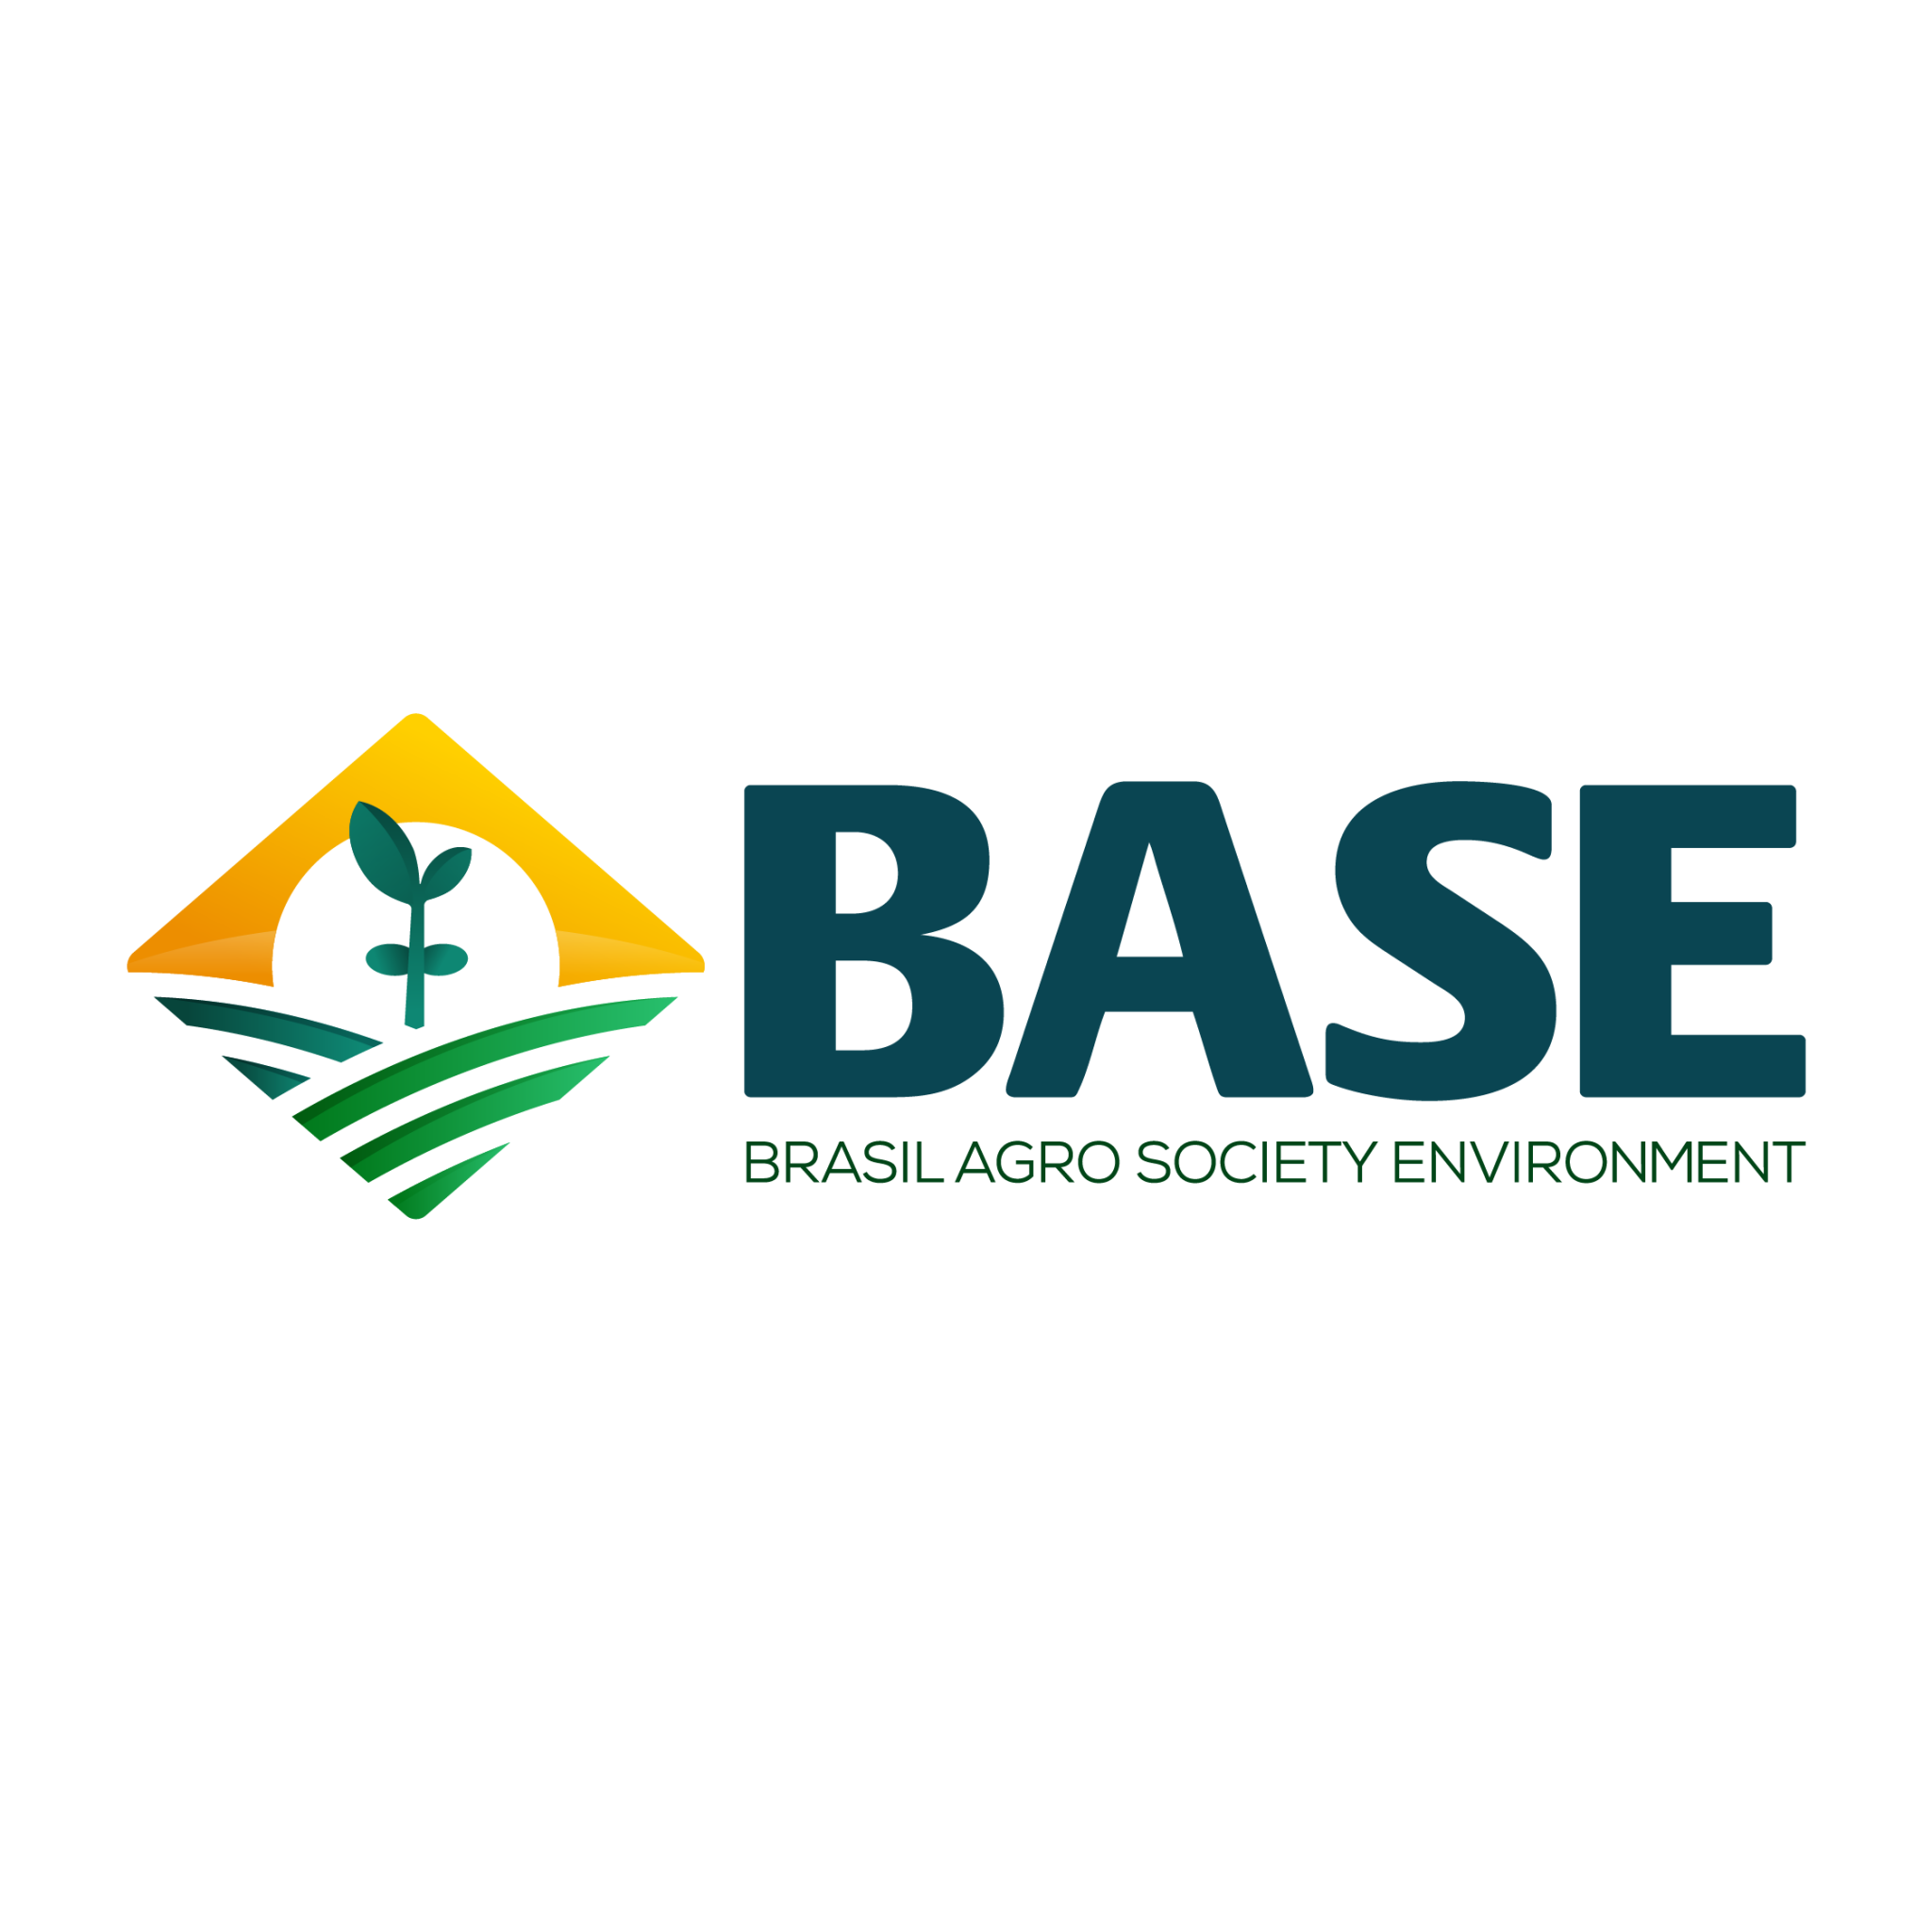 Brasil Agro Society Environment